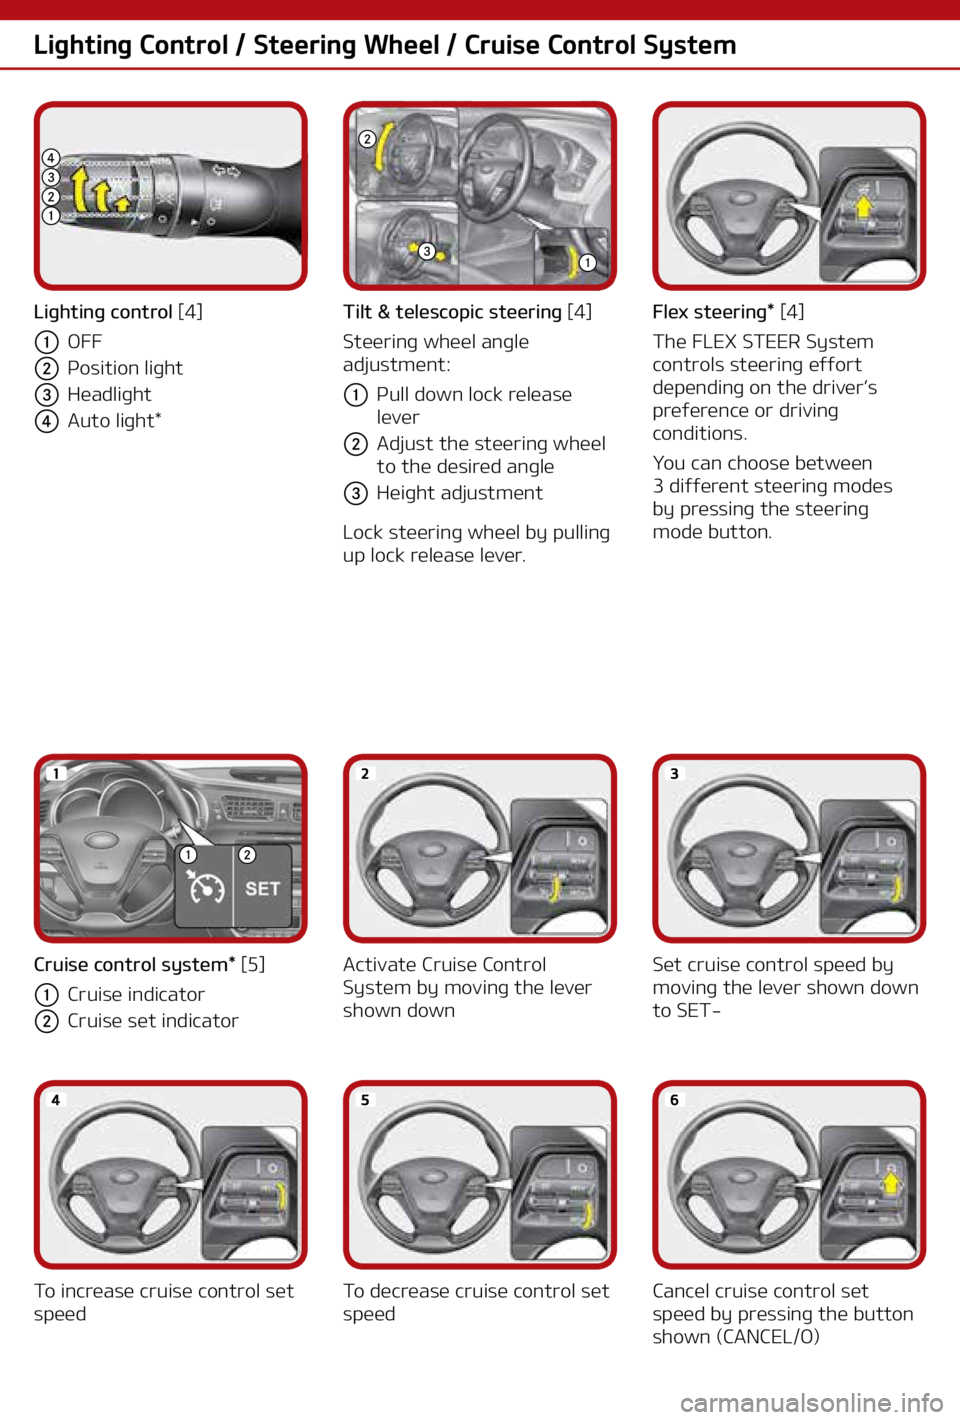 KIA CEED 2018  Owners Manual Lighting Control / Steering Wheel / Cruise Control System 
1234
1
2
3
12
Lighting control [4]
a OFF
b Position light
c Headlight
d Auto light*Tilt & telescopic steering [4]
Steering wheel angle�